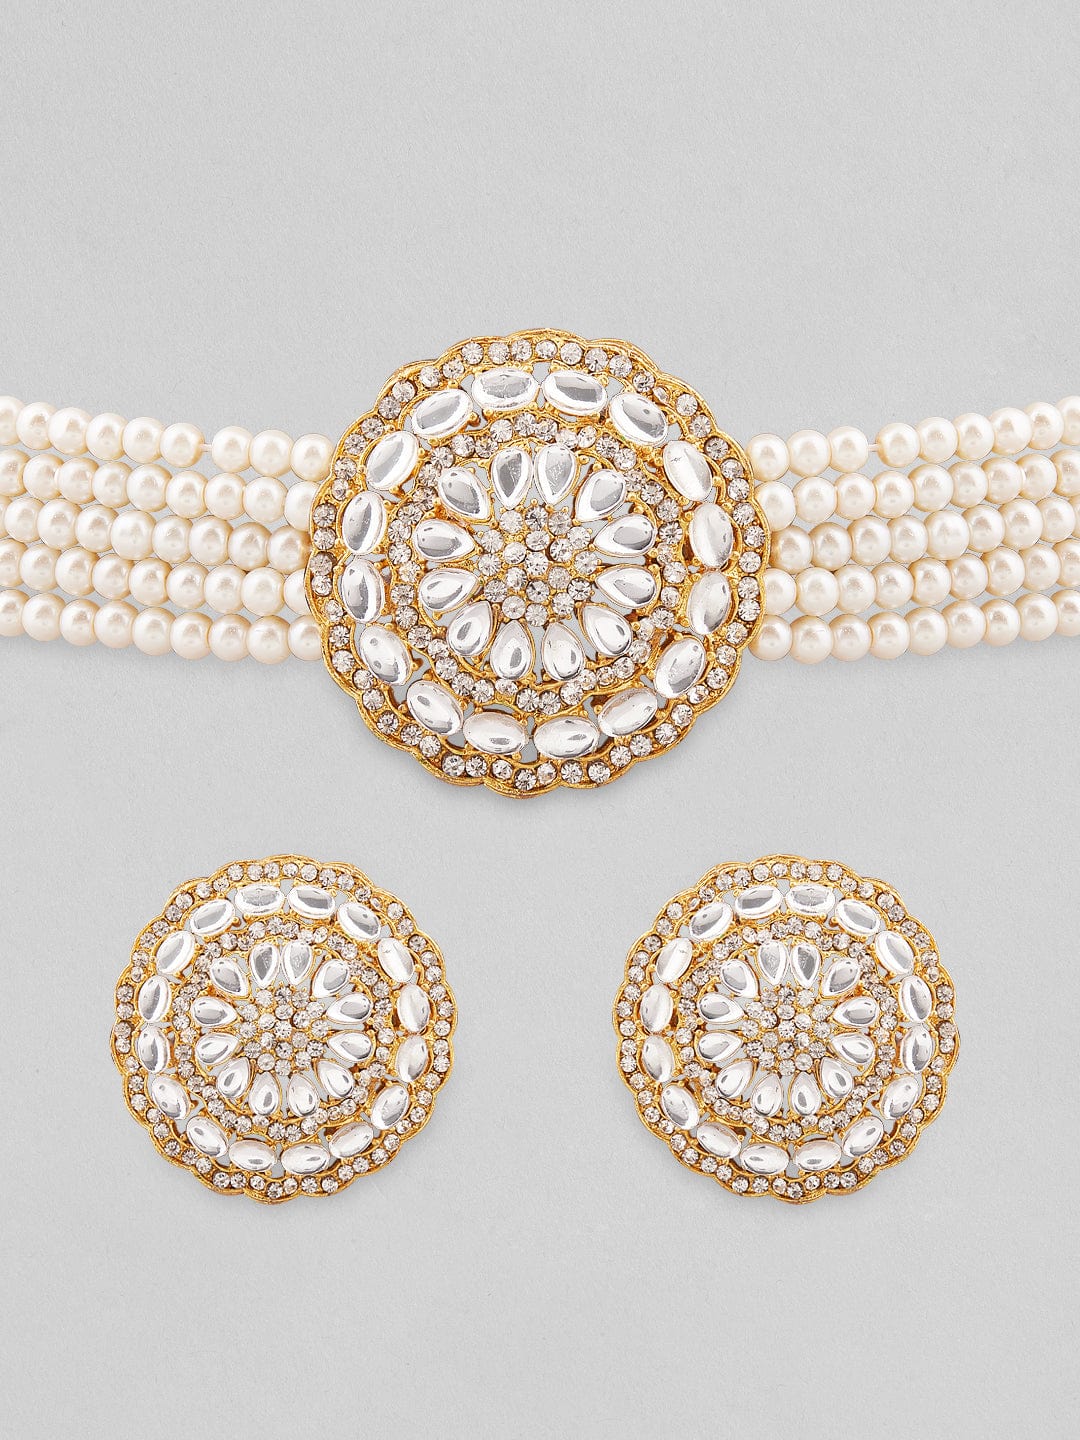 Rubans Gold Plated Elegant Kundan Choker Set With White Beads. Choker Necklace Set